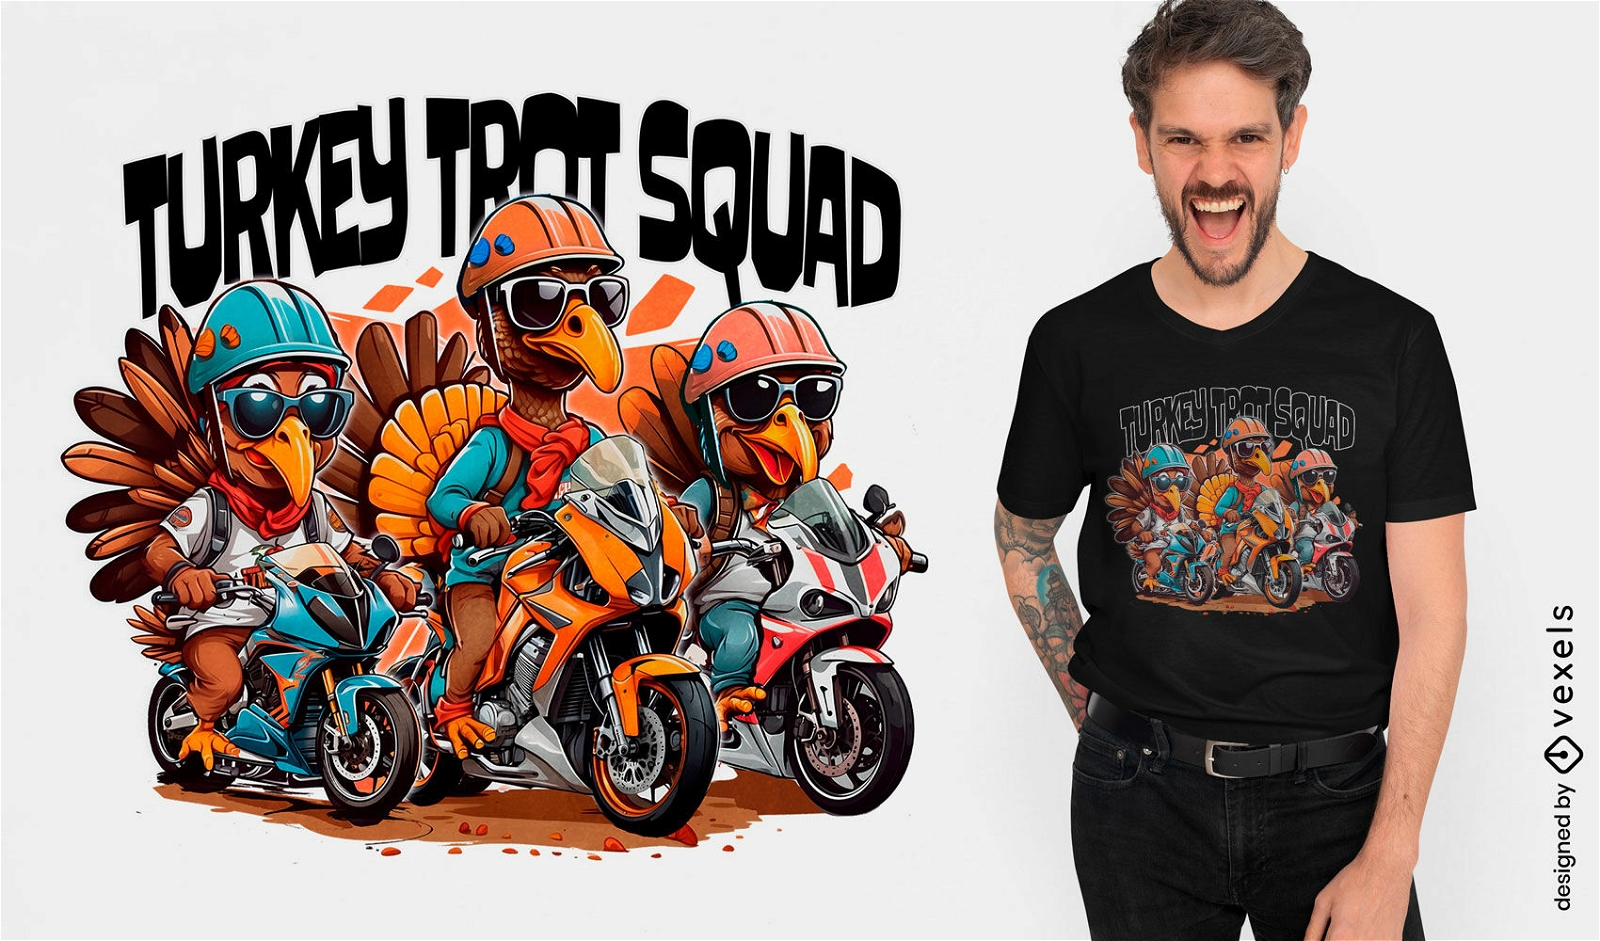 T?rkei Trot Squad Motorrad-T-Shirt-Design